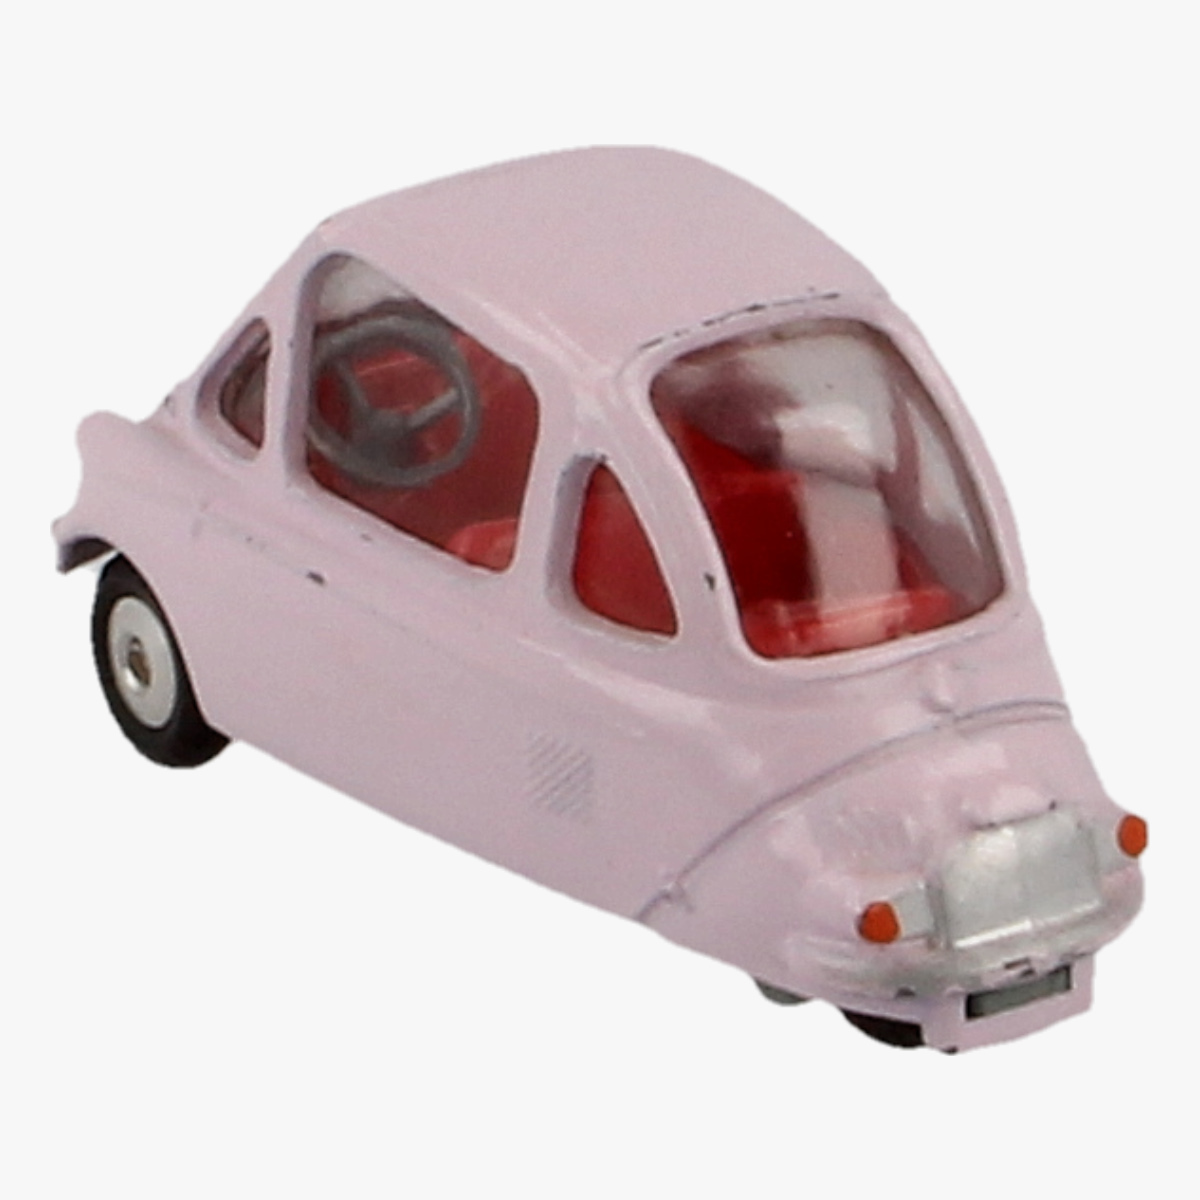 Afbeeldingen van Corgi Toys. Heinkel I Economy Car. Nr. 233